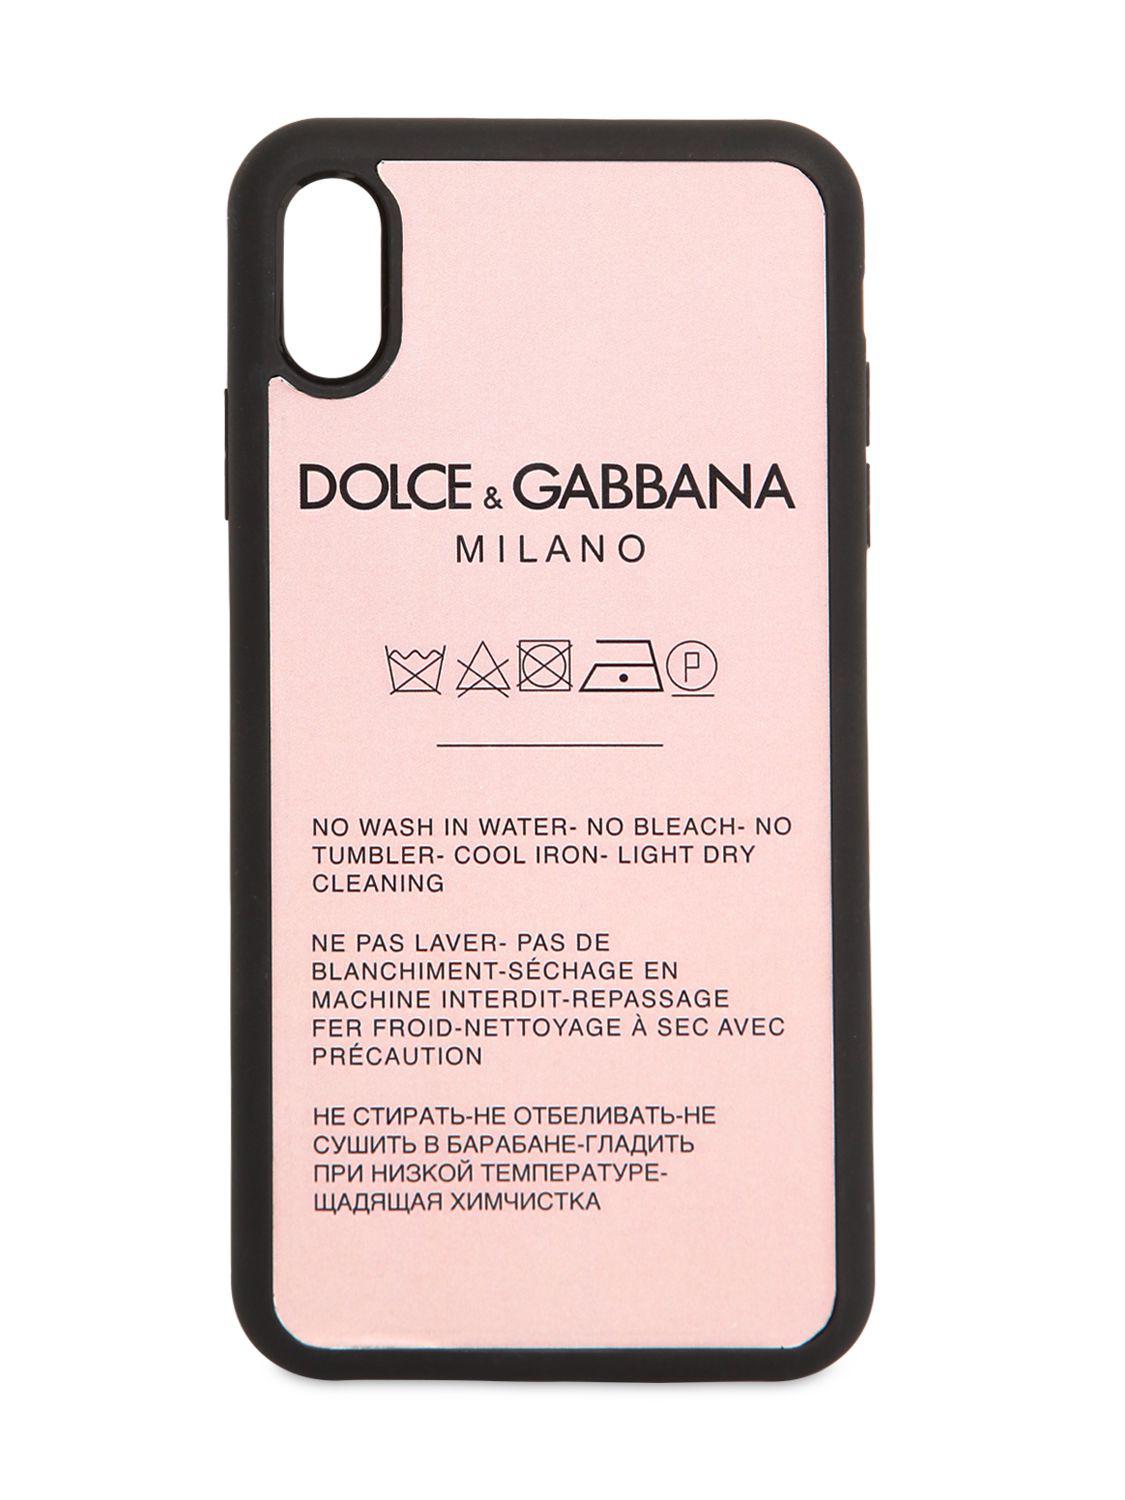 dolce and gabbana phone case iphone x